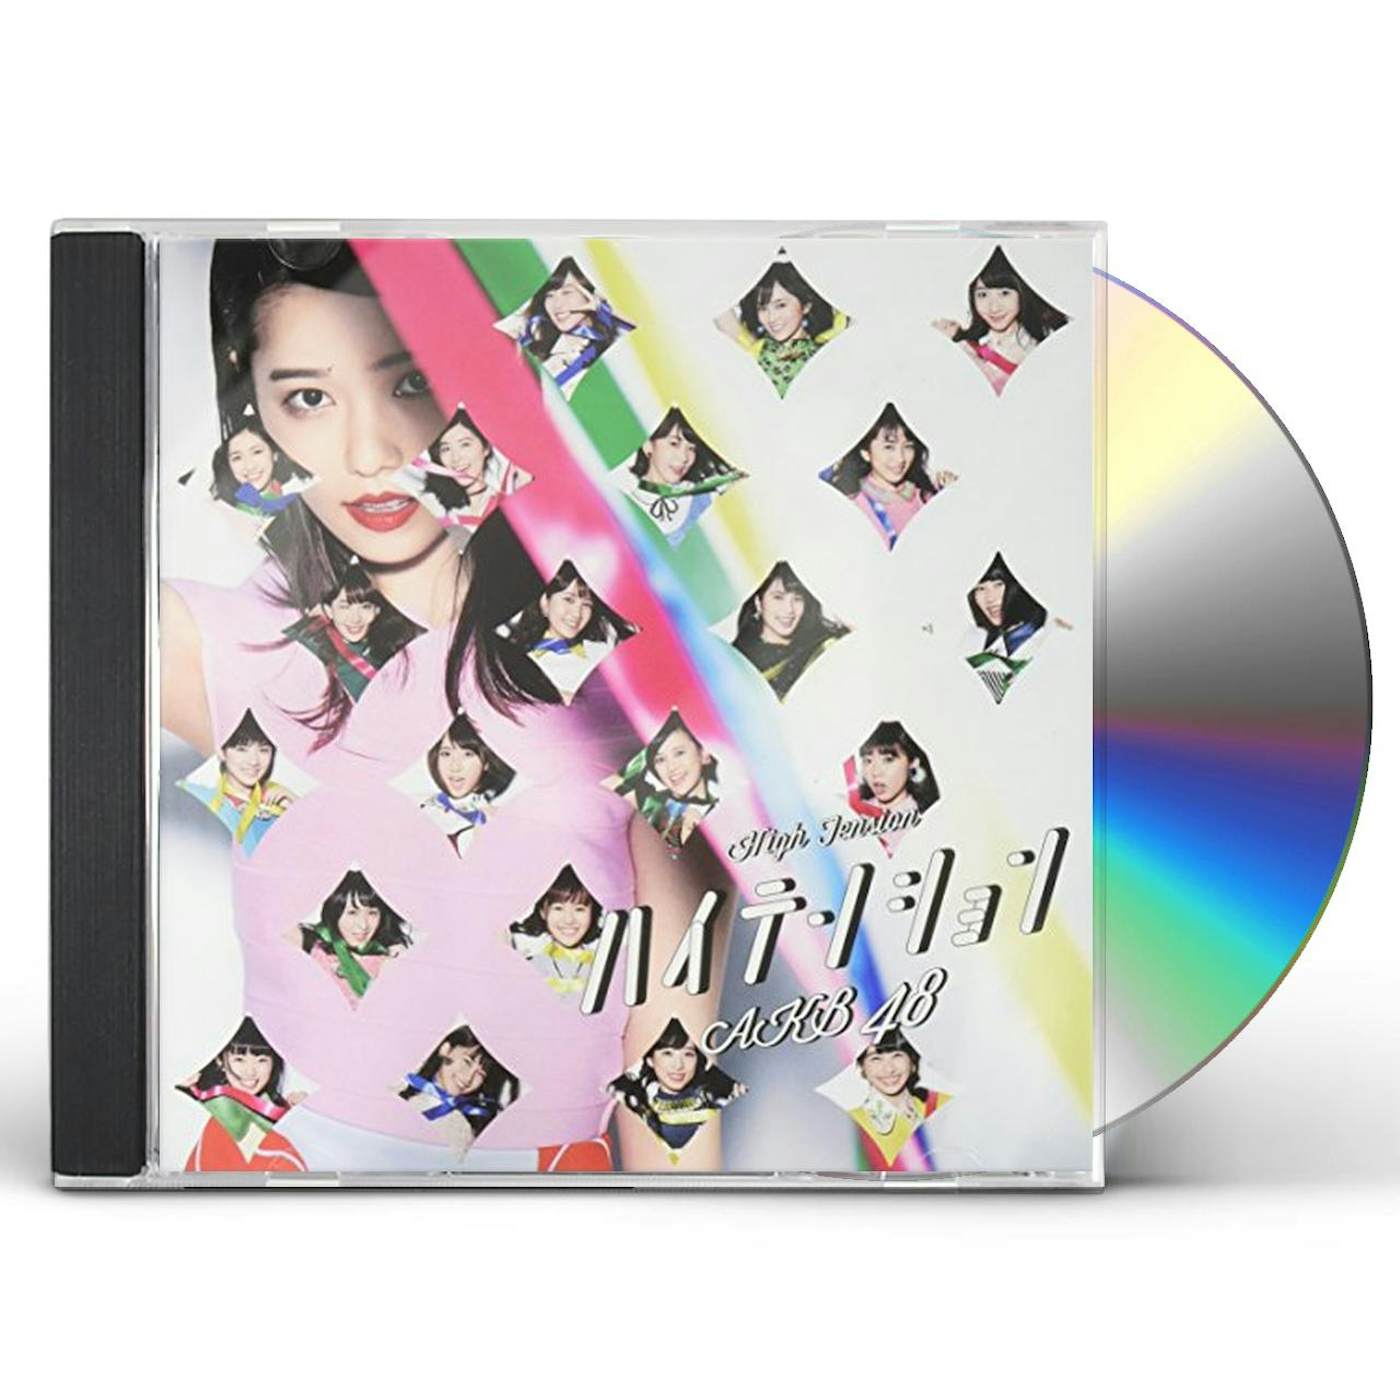 AKB48 HIGH TENSION /LTD CD+DVD DELUXE VERSION A CD